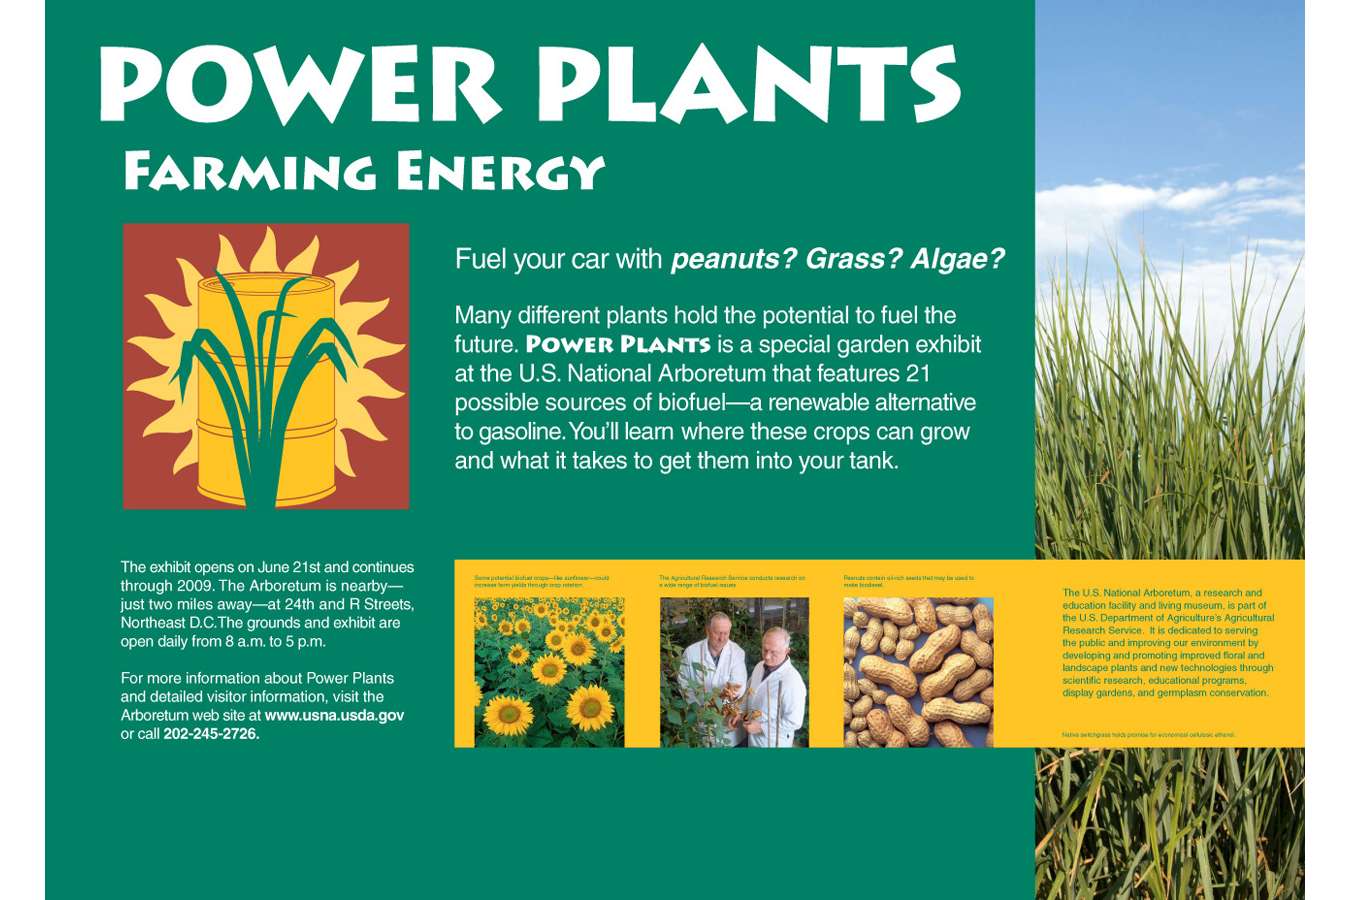 Arbor 3grfc  : Farming Energy plaque invites visitors to visit Power Plants at the National Arboretum